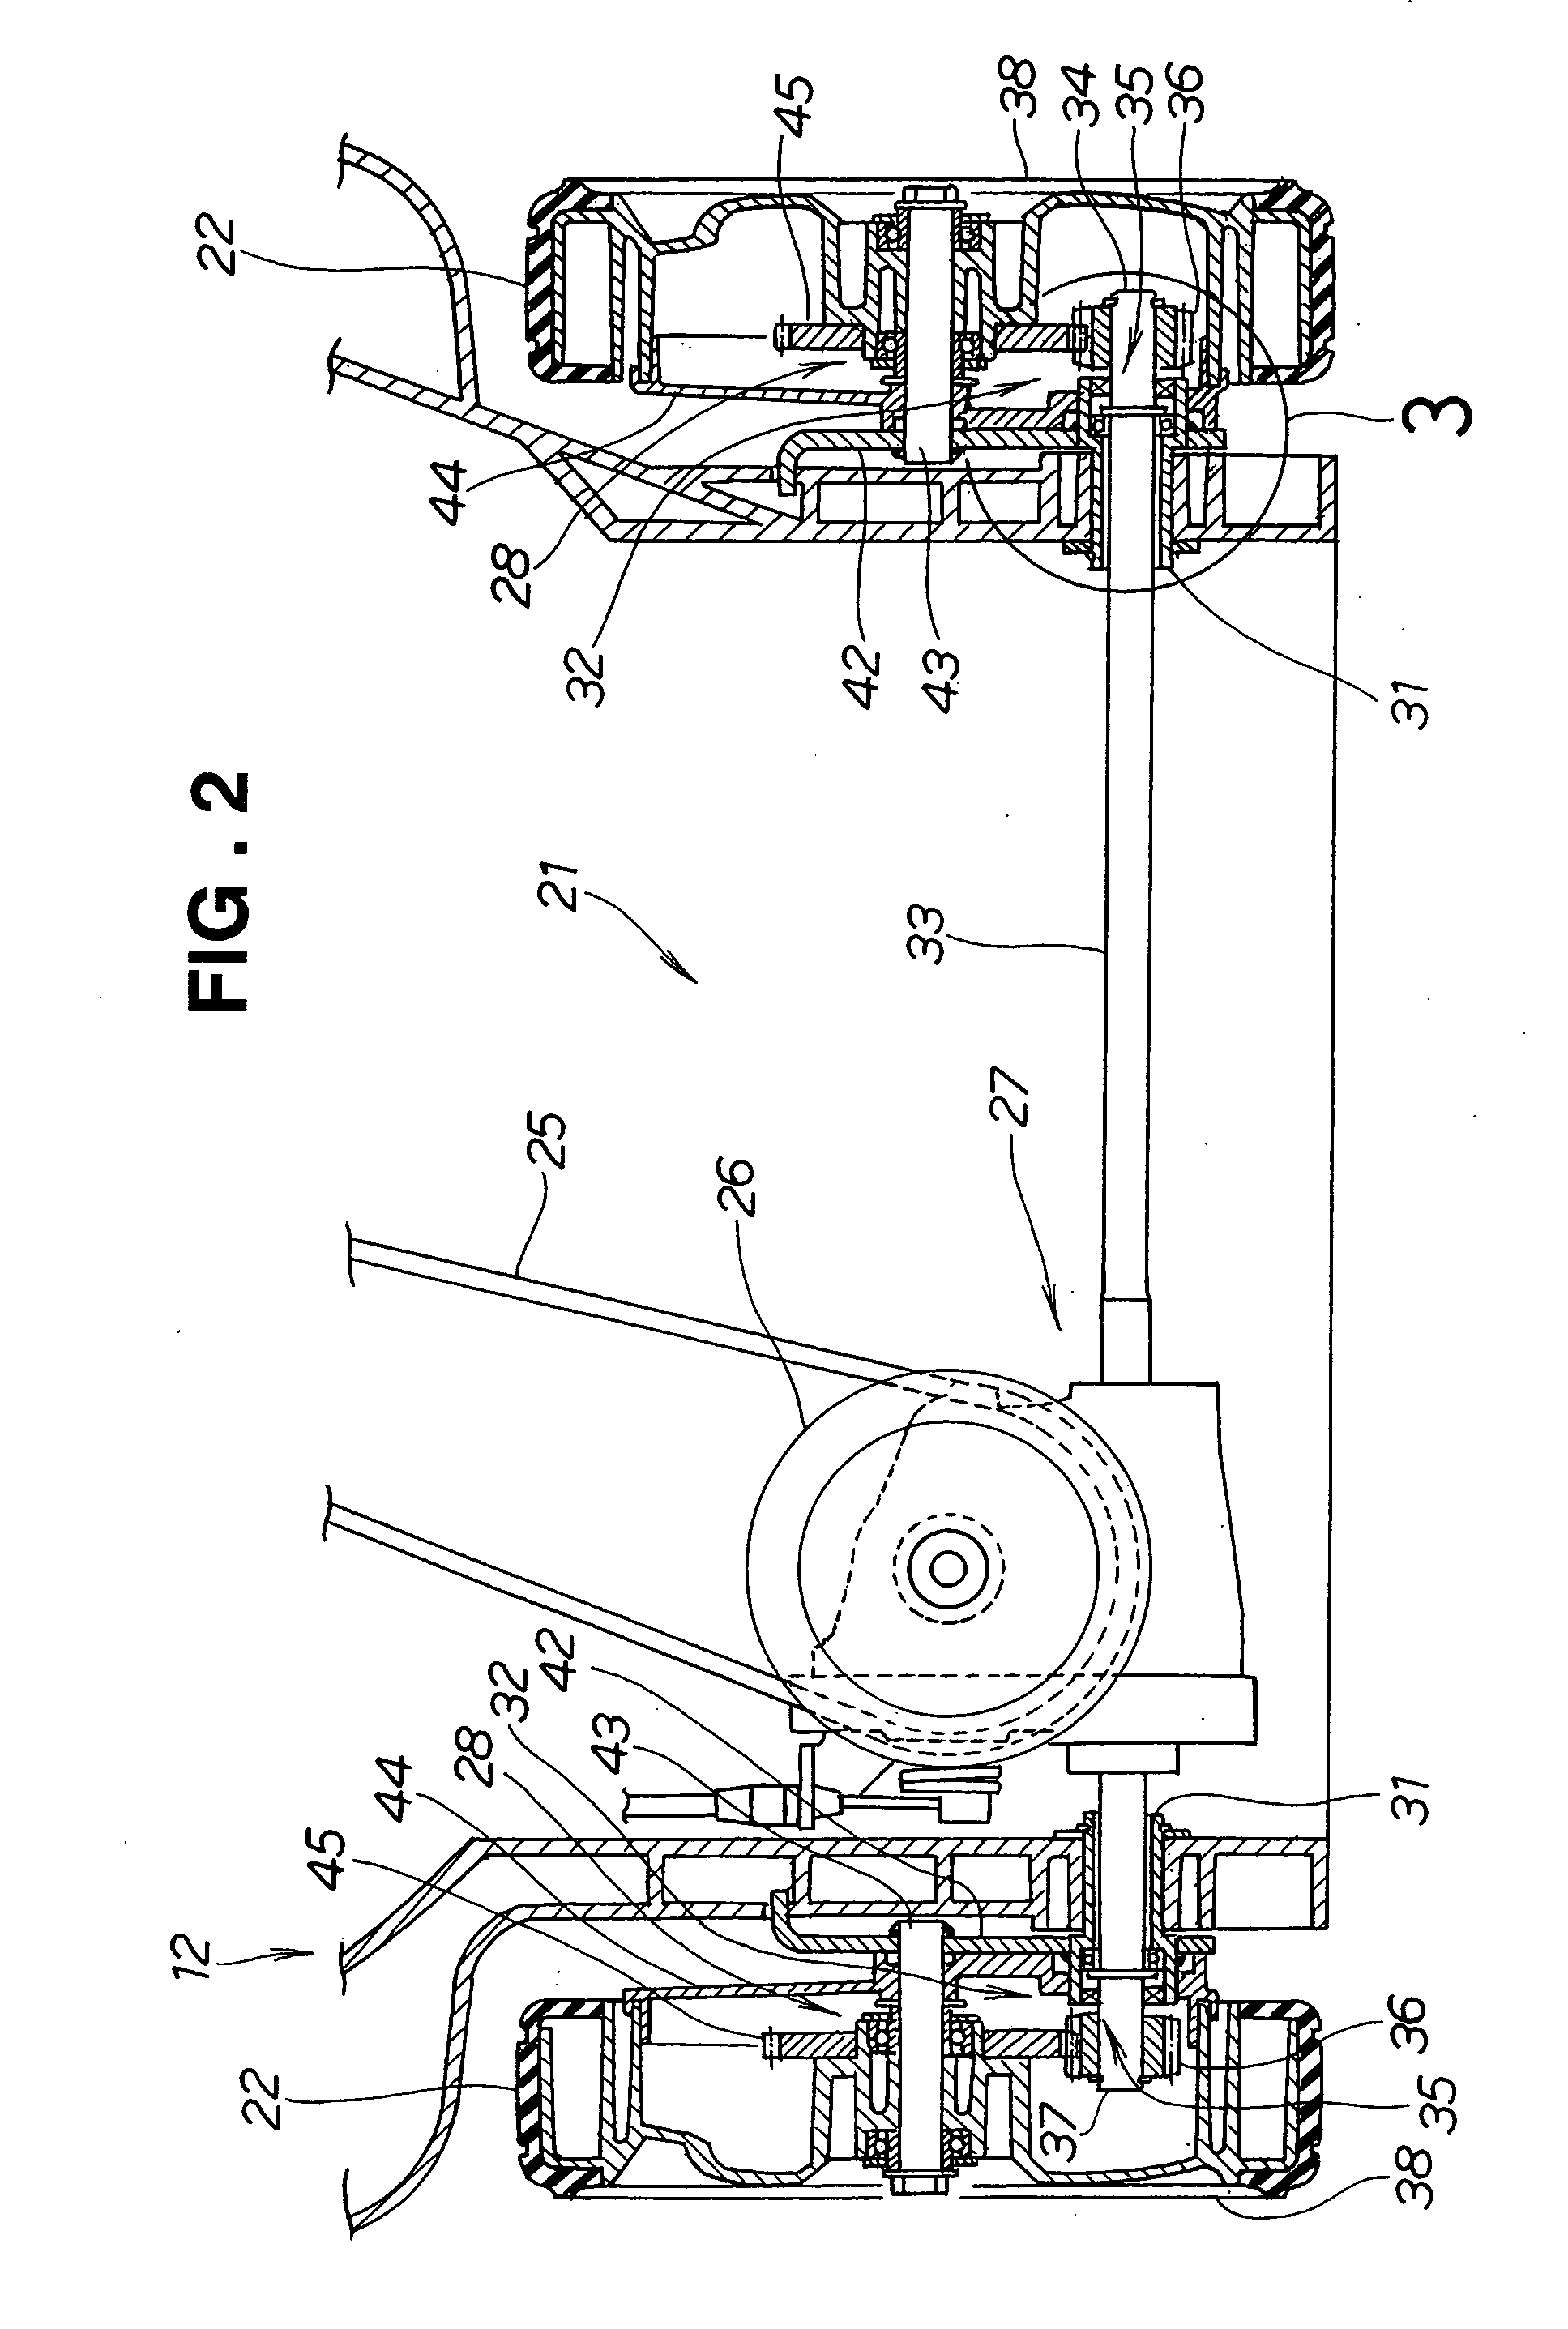 Power transmission mechanism